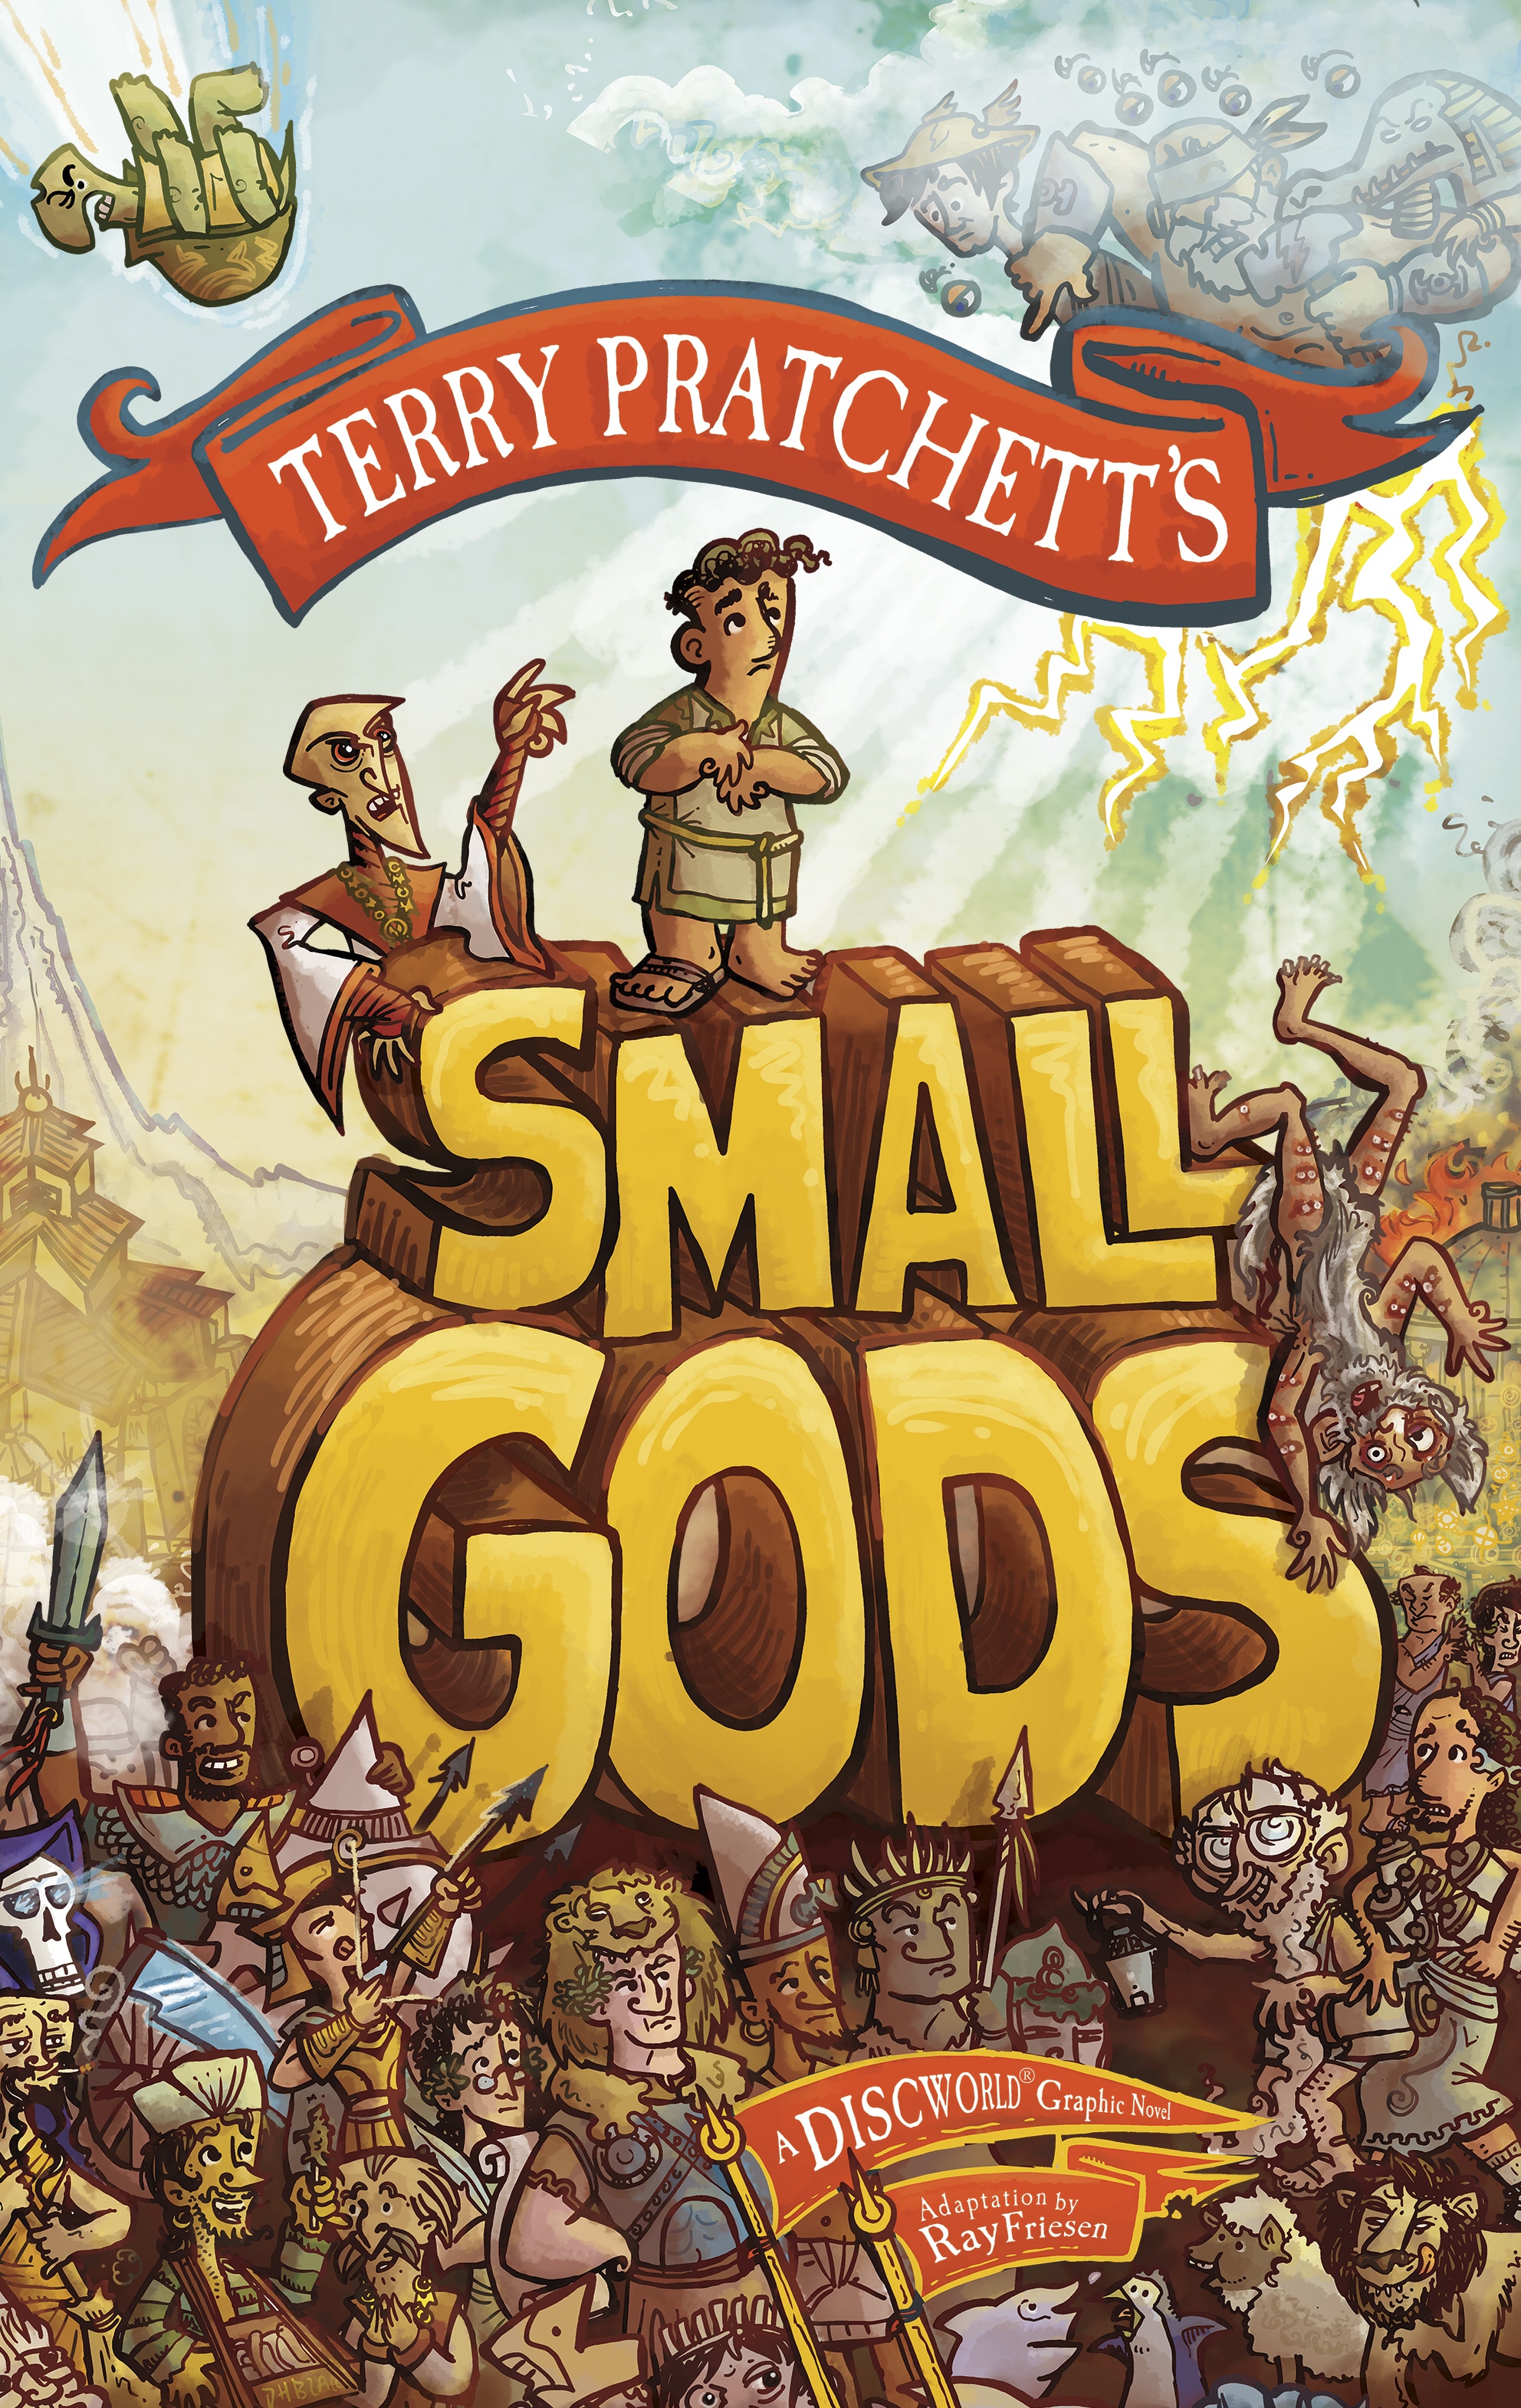 Book “Small Gods” by Terry Pratchett, Ray Friesen — July 28, 2016